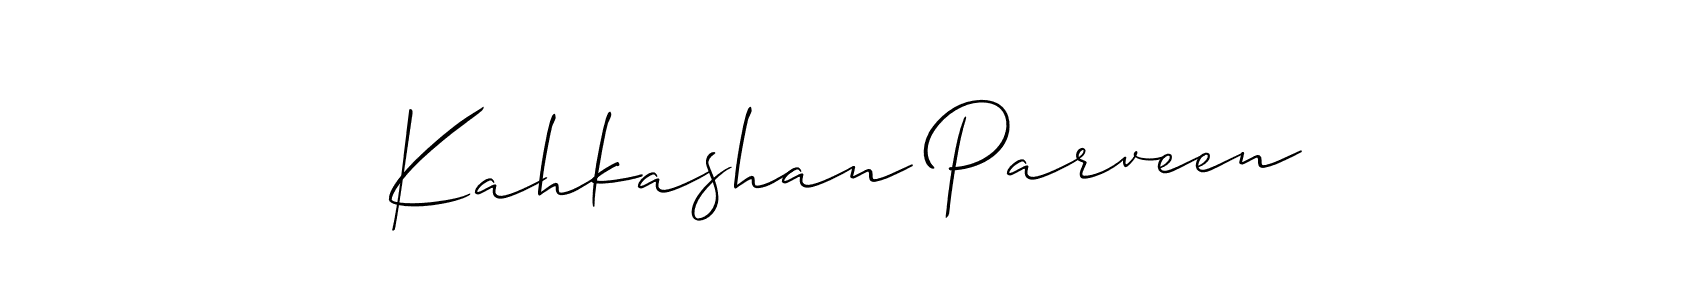 How to make Kahkashan Parveen signature? Allison_Script is a professional autograph style. Create handwritten signature for Kahkashan Parveen name. Kahkashan Parveen signature style 2 images and pictures png